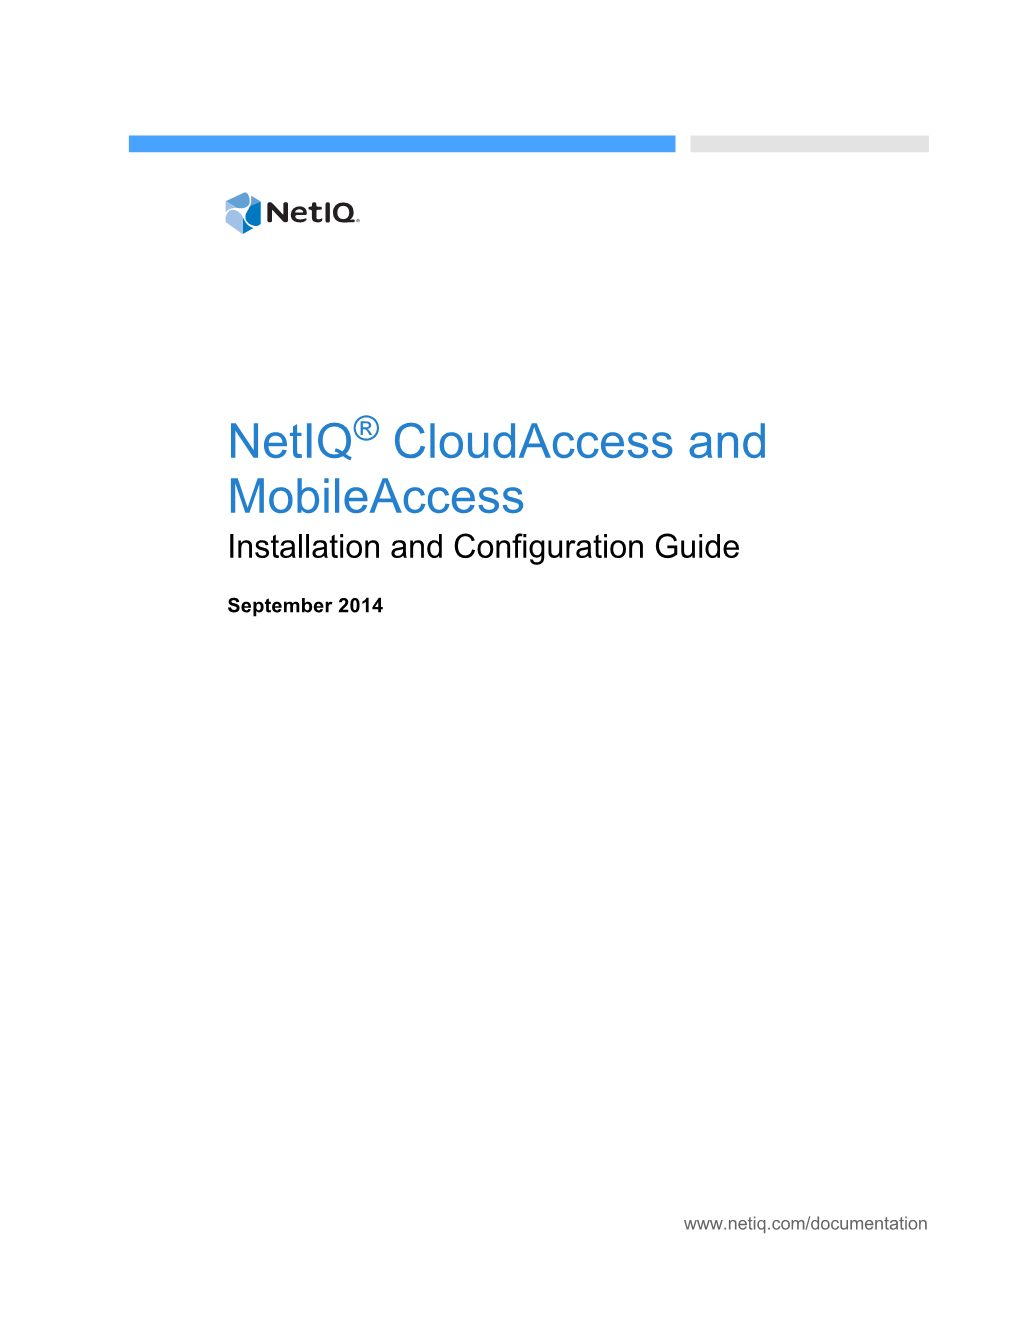 Netiq® Cloudaccess and Mobileaccess Installation and Configuration Guide